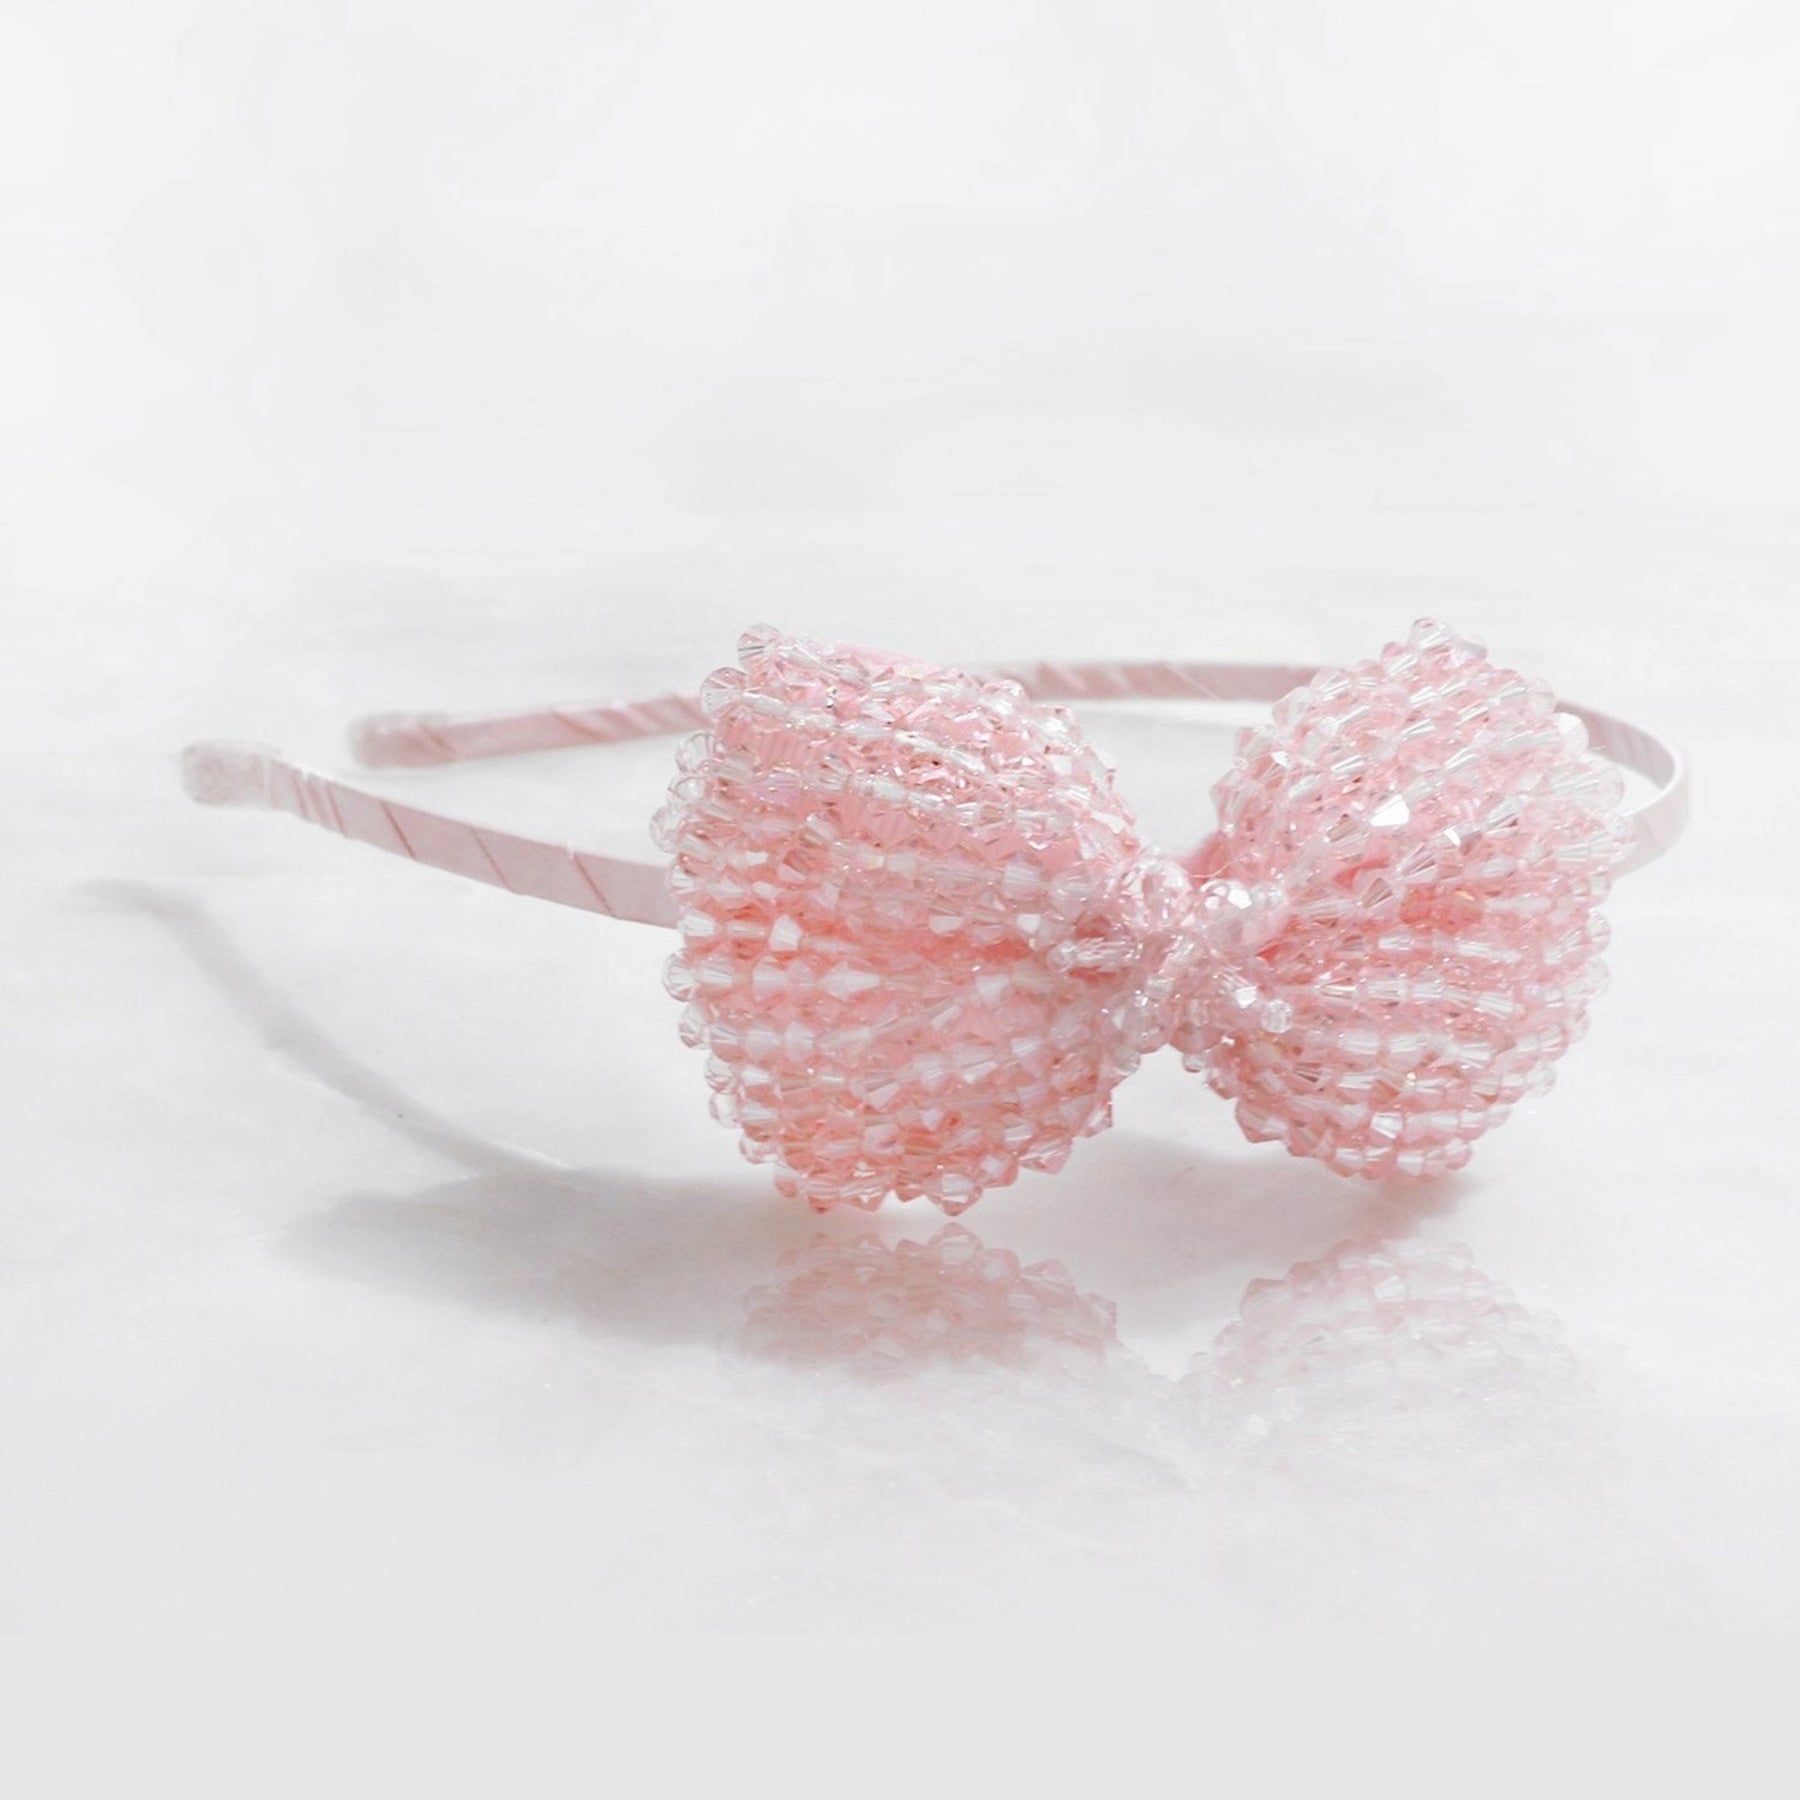 Designer Children's Hair Accessories  Pink Pearl Girls Headband – Sienna  Likes To Party - Shop